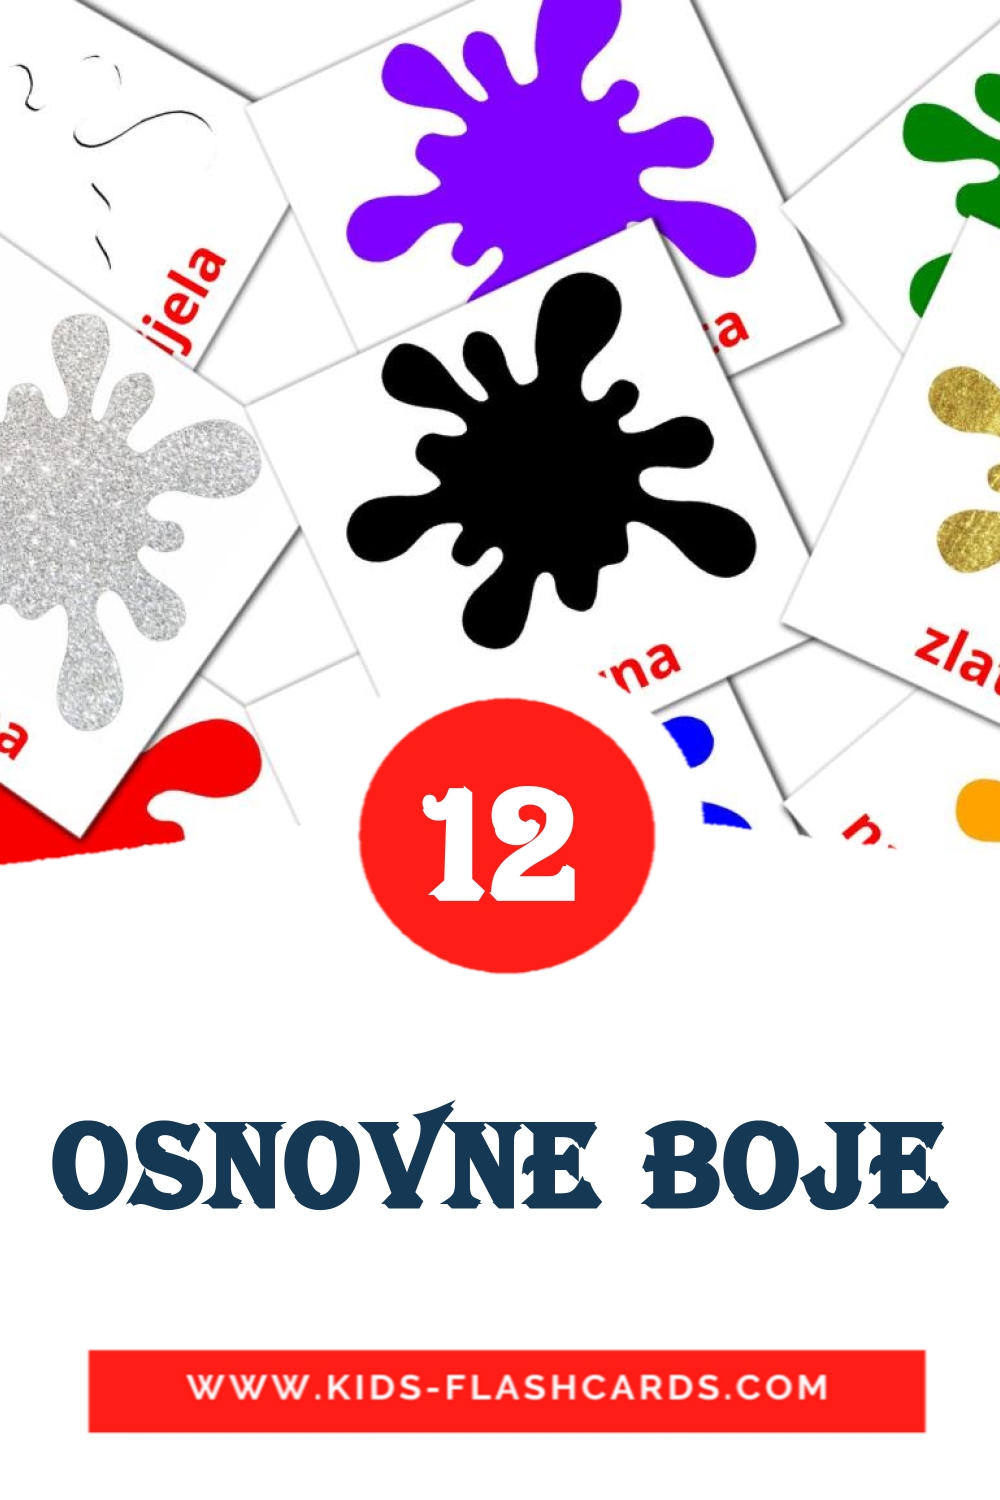 OSNOVNE BOJE на боснийском для Детского Сада (12 карточек)